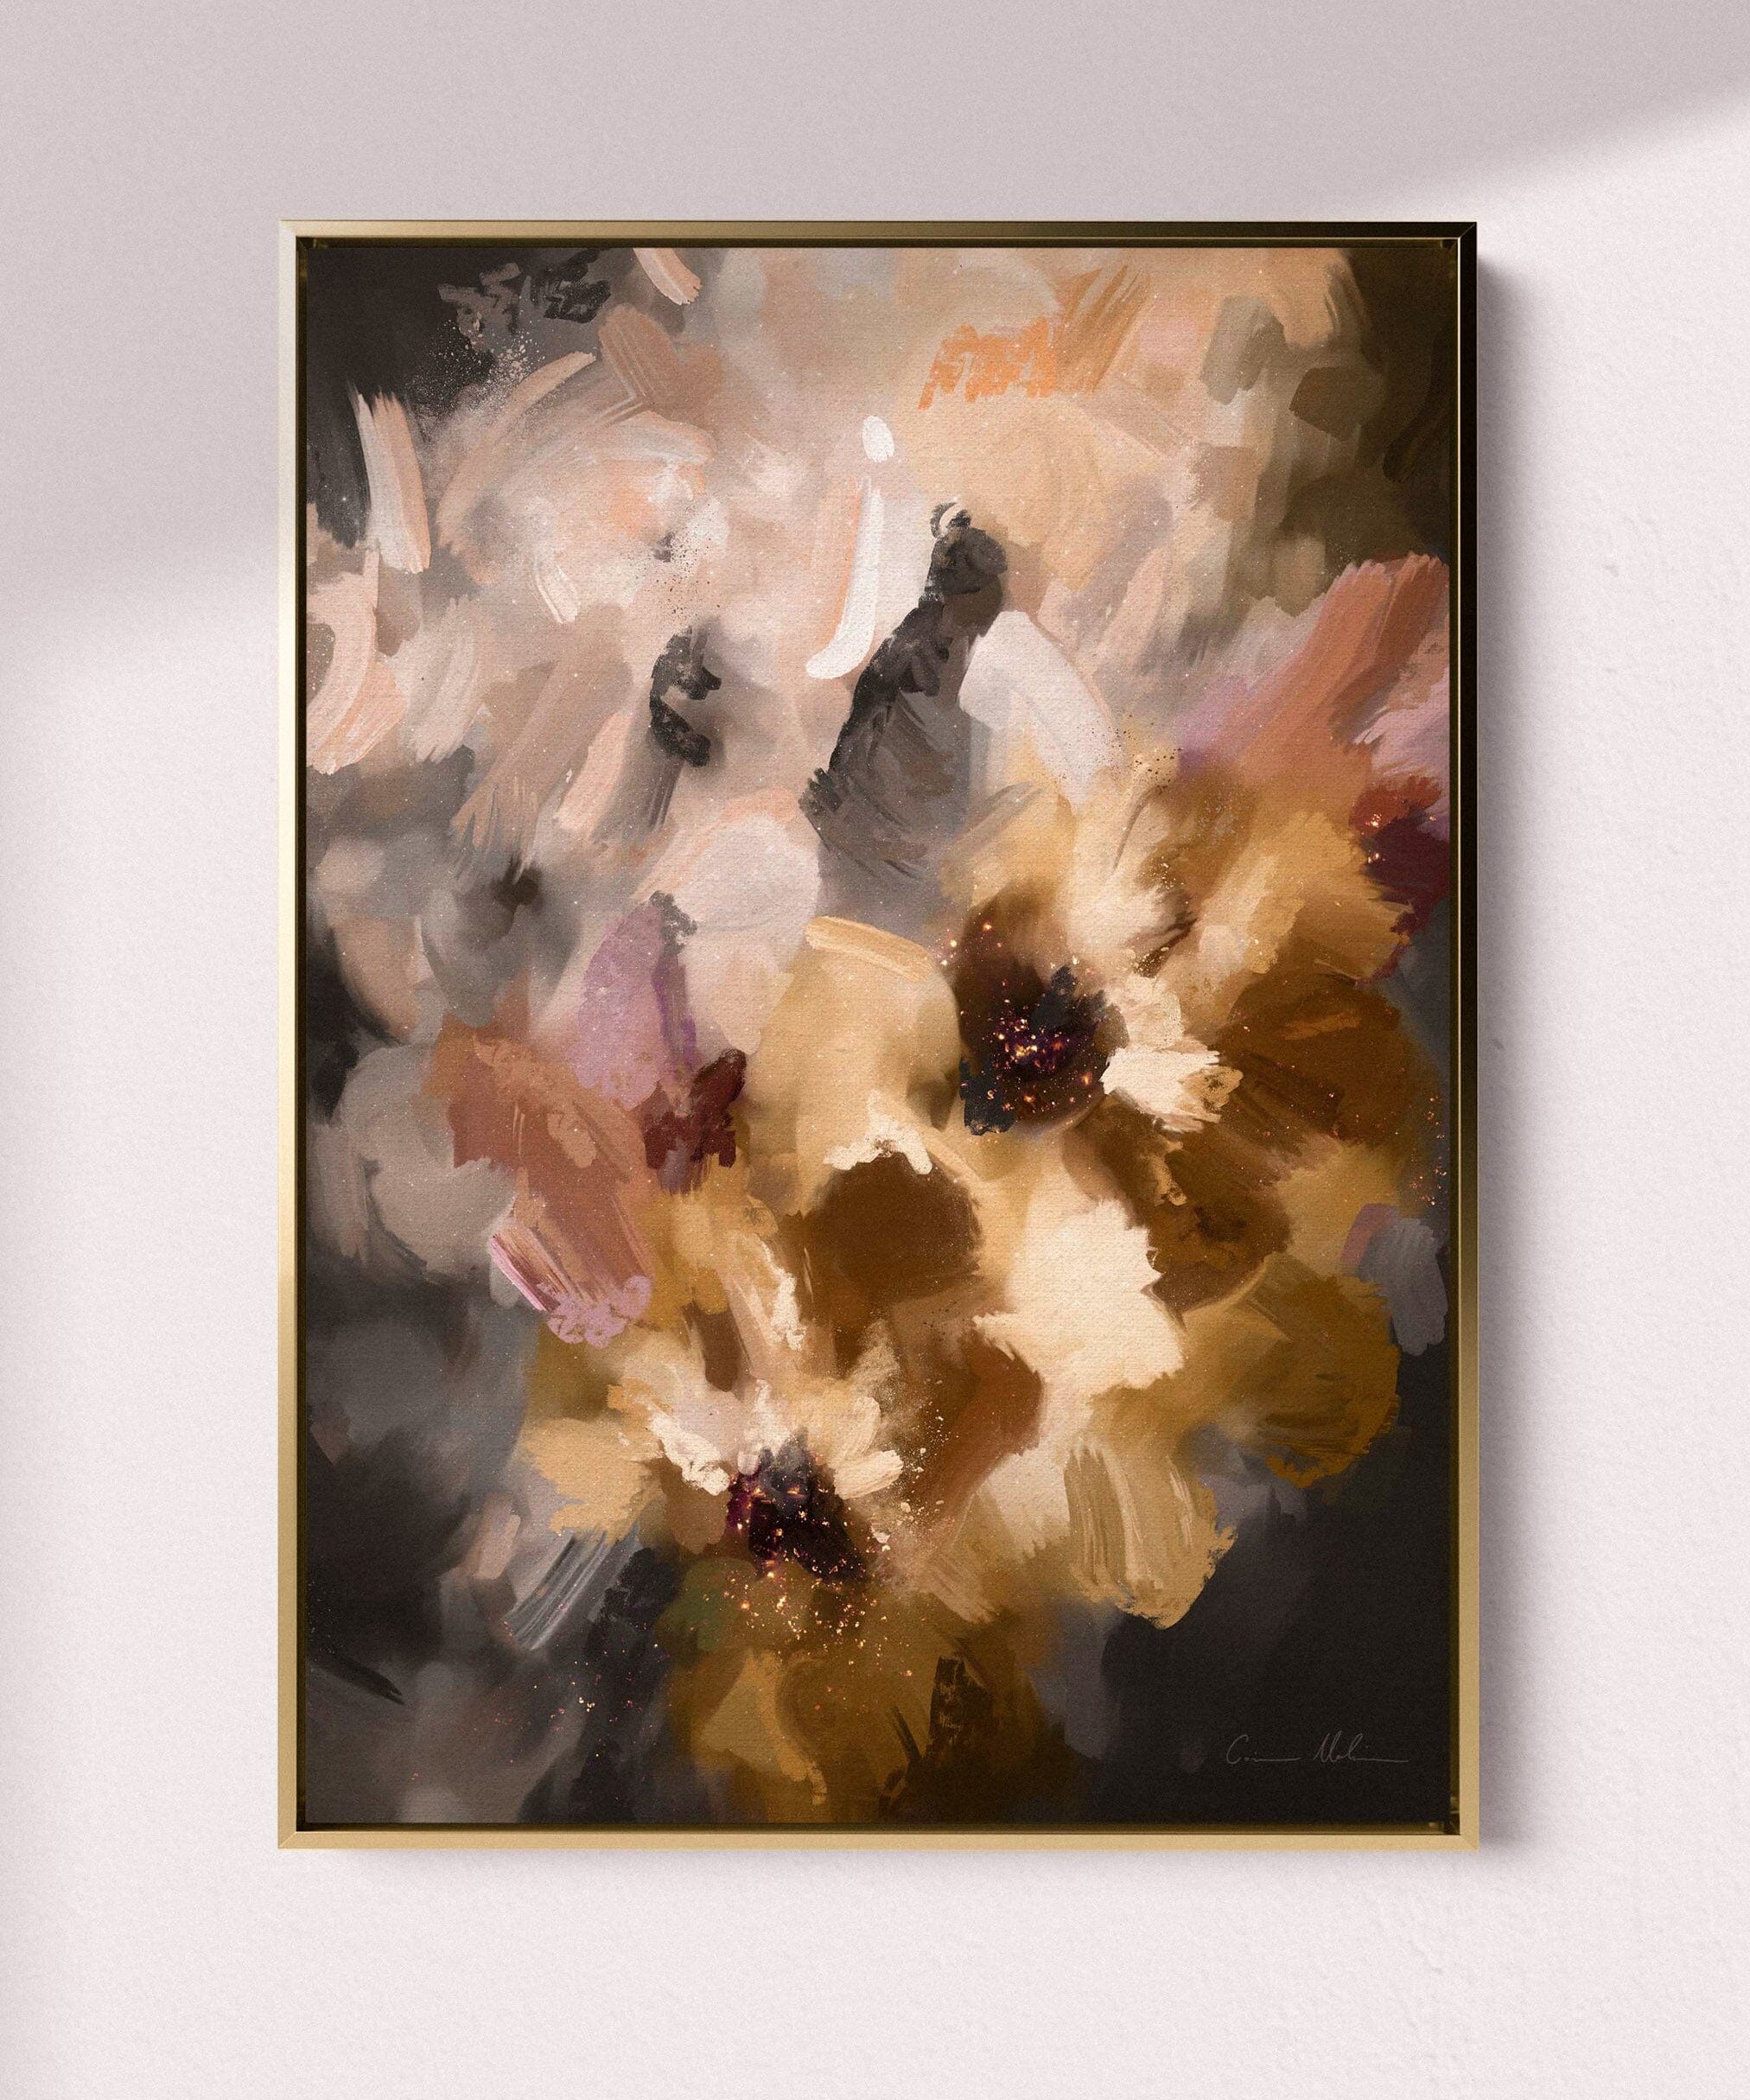 "Tokyo Bloom" [Portrait] Limited Edition Fine Art Print Canvas Wall Art Corinne Melanie Art 24x32in / 60x80cm Professionally Framed - Gold Black Sides Floating Frame 